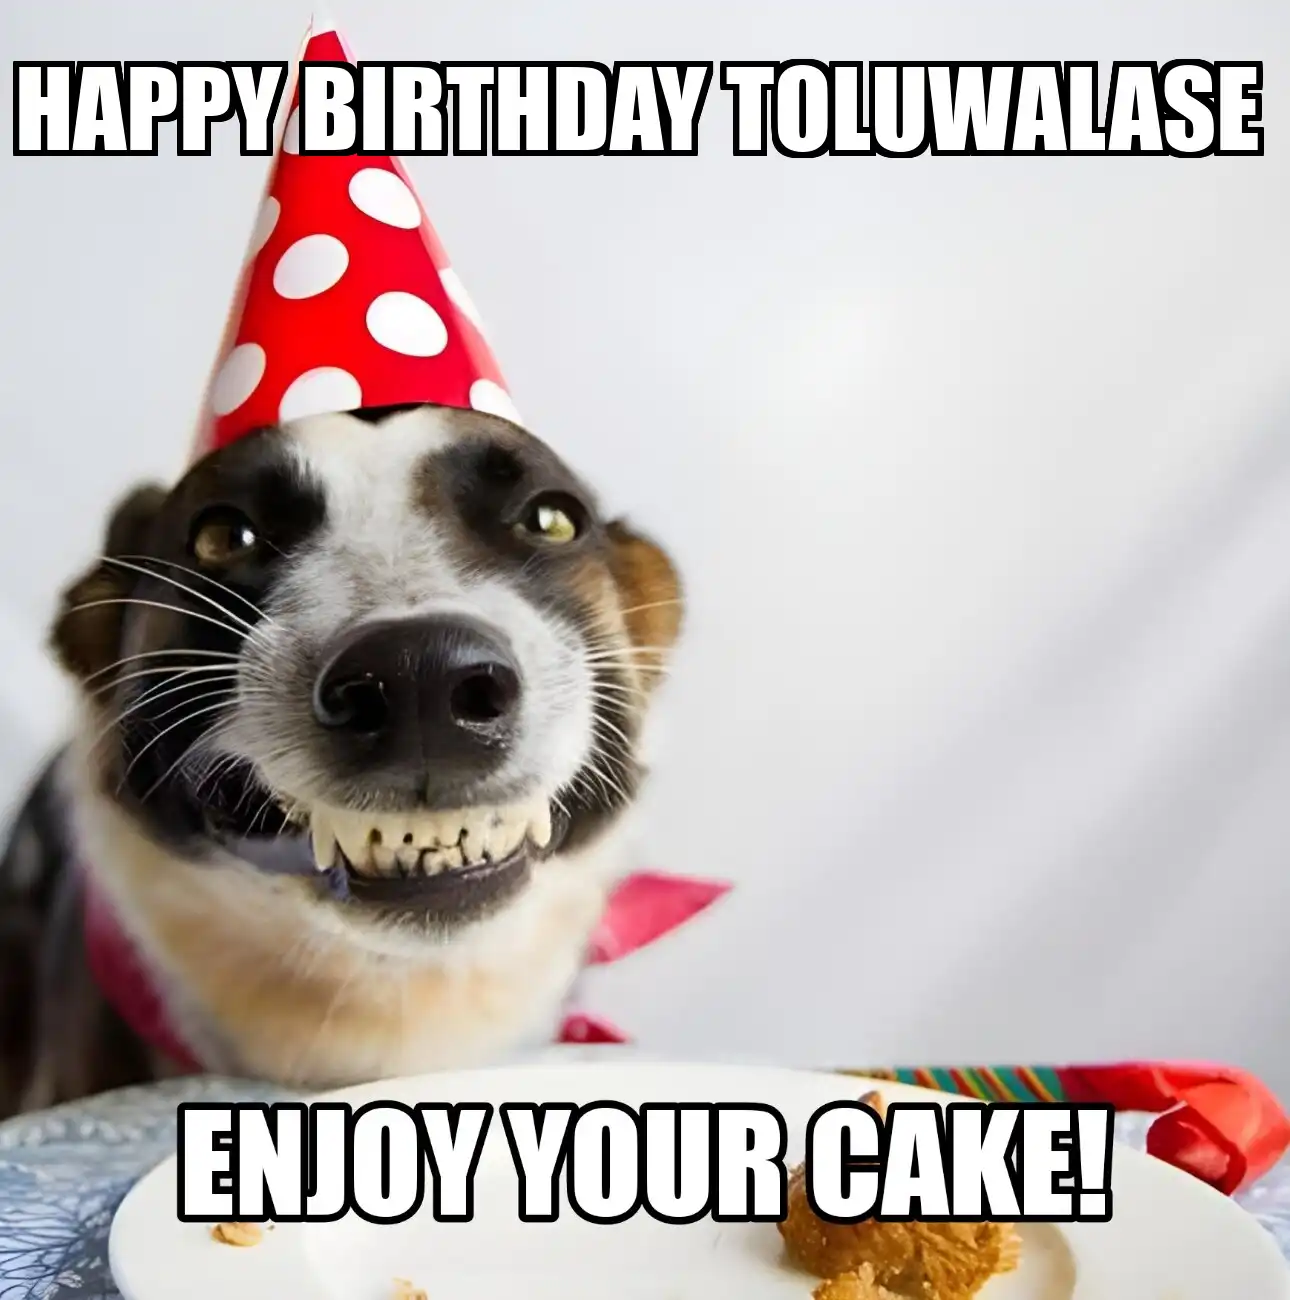 Happy Birthday Toluwalase Enjoy Your Cake Dog Meme